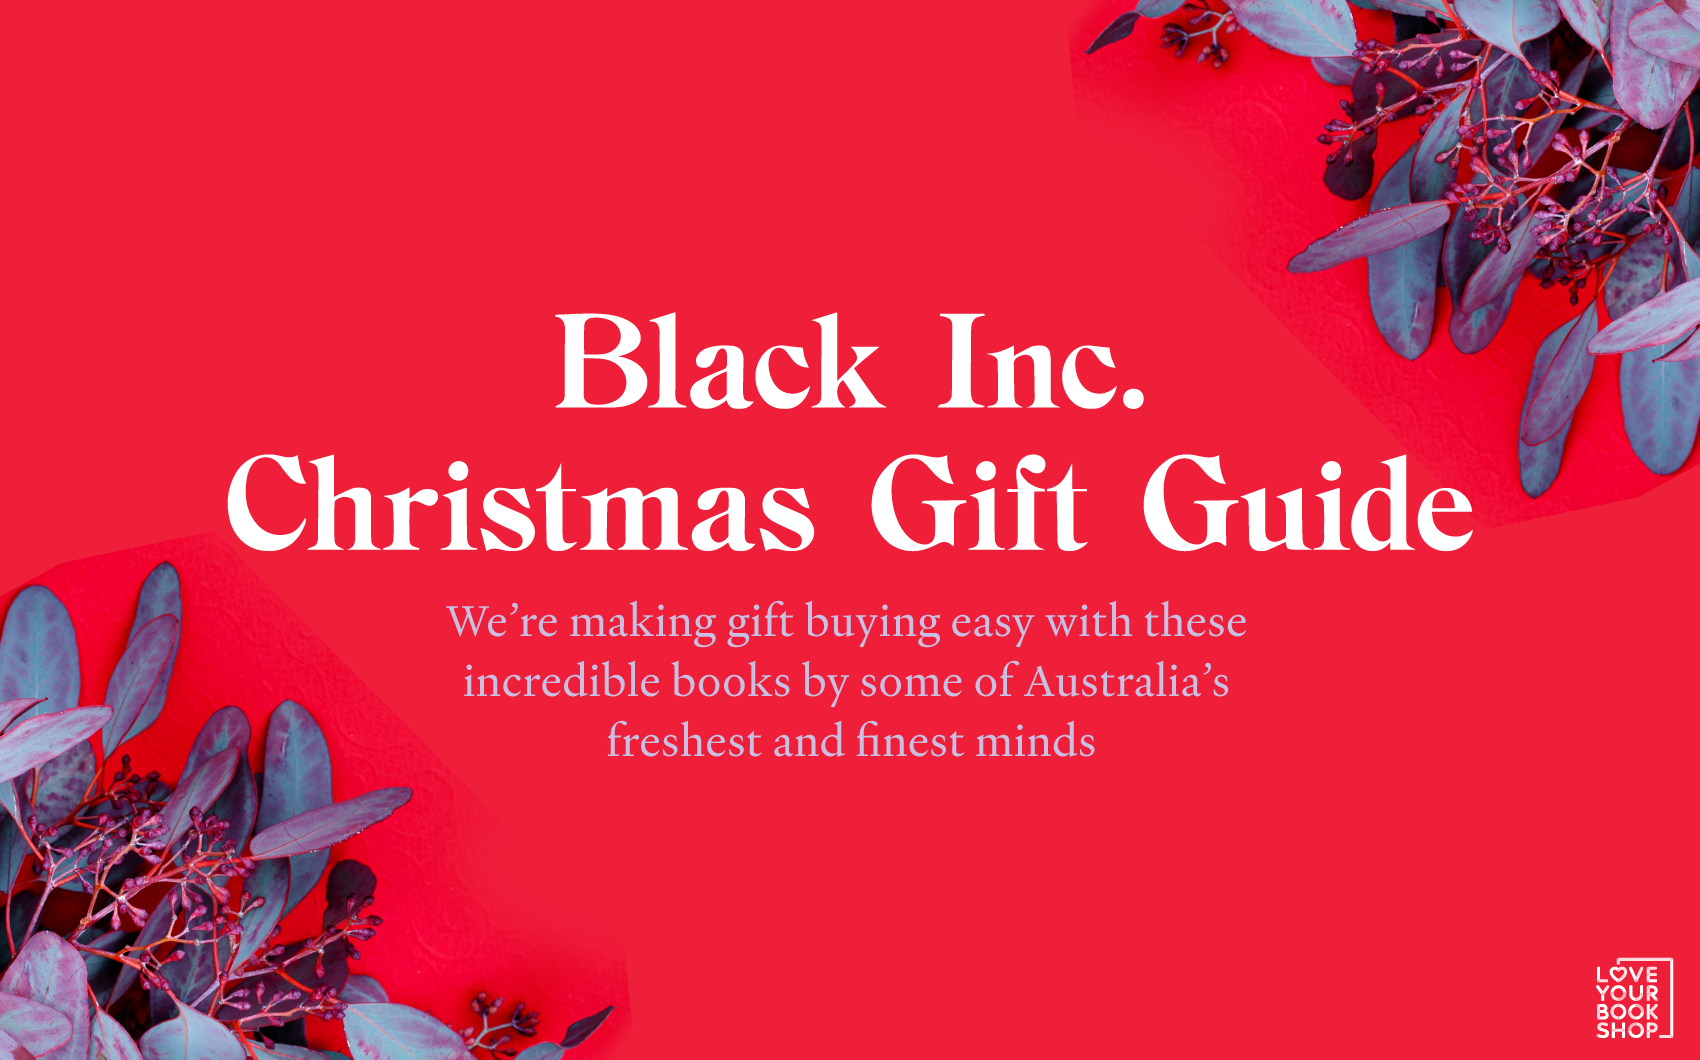 Black Inc. Christmas Gift Guide